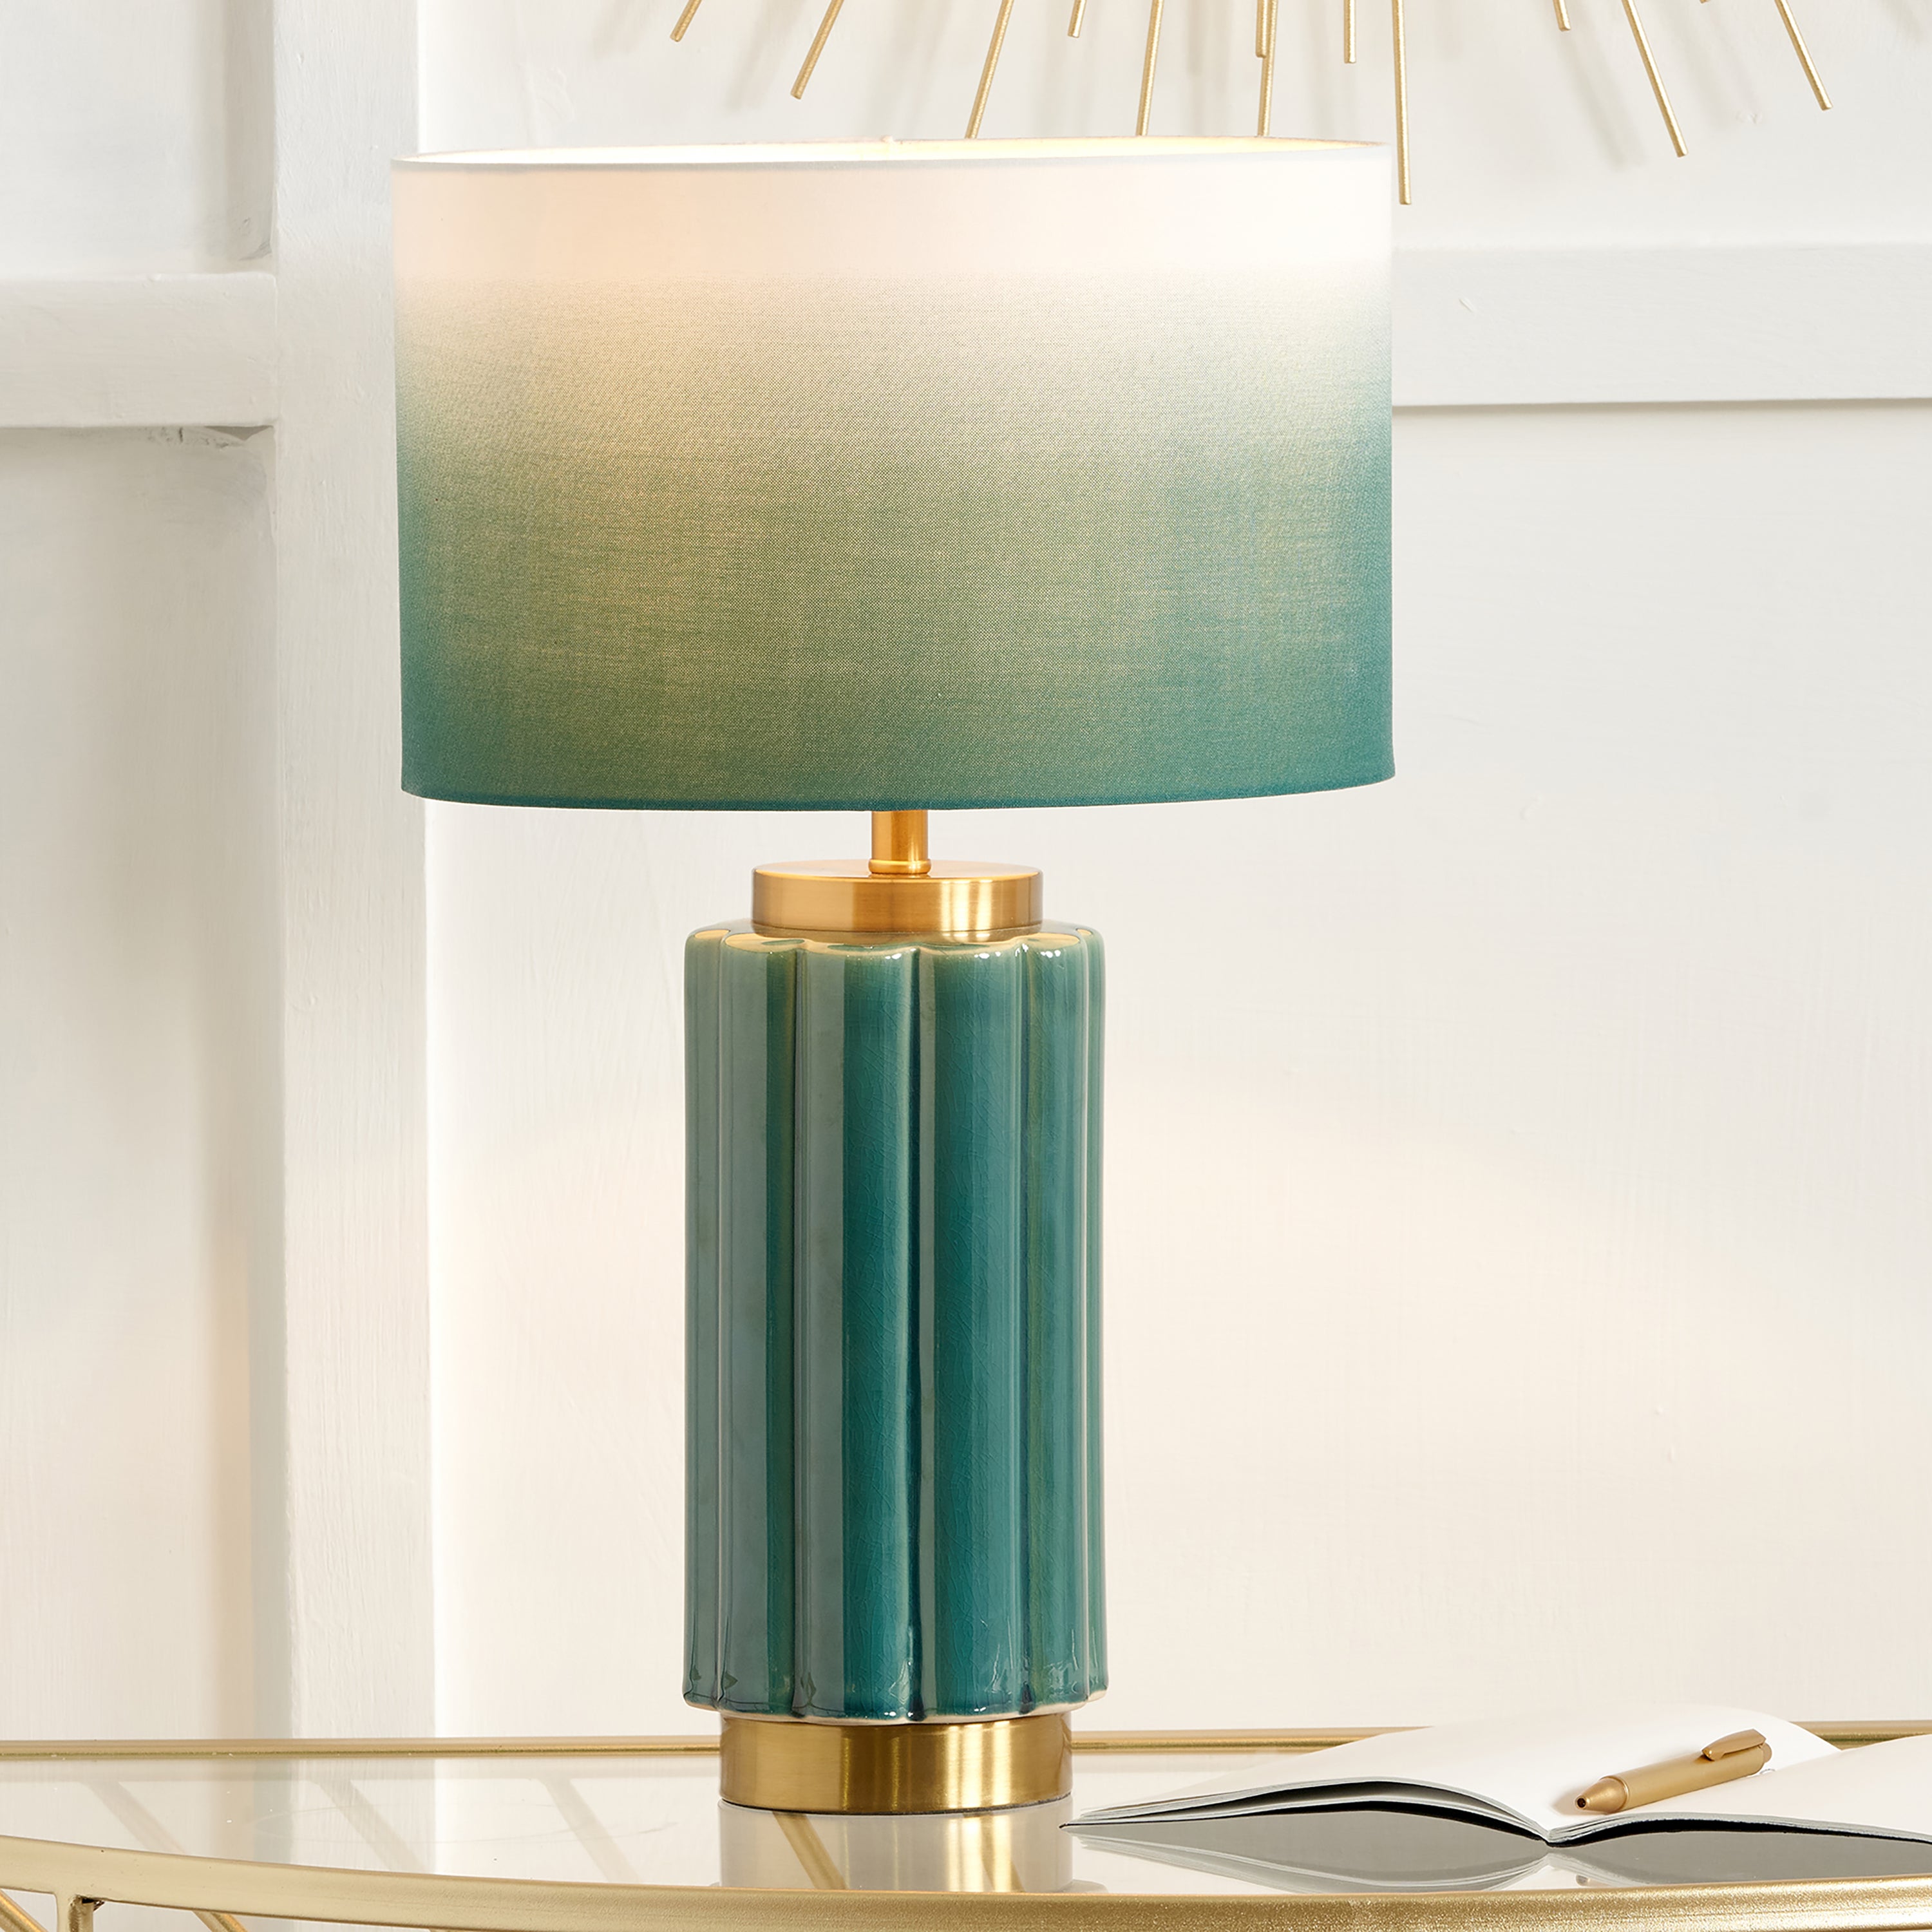 Lushan Scalloped Ceramic Table Lamp Teal Green